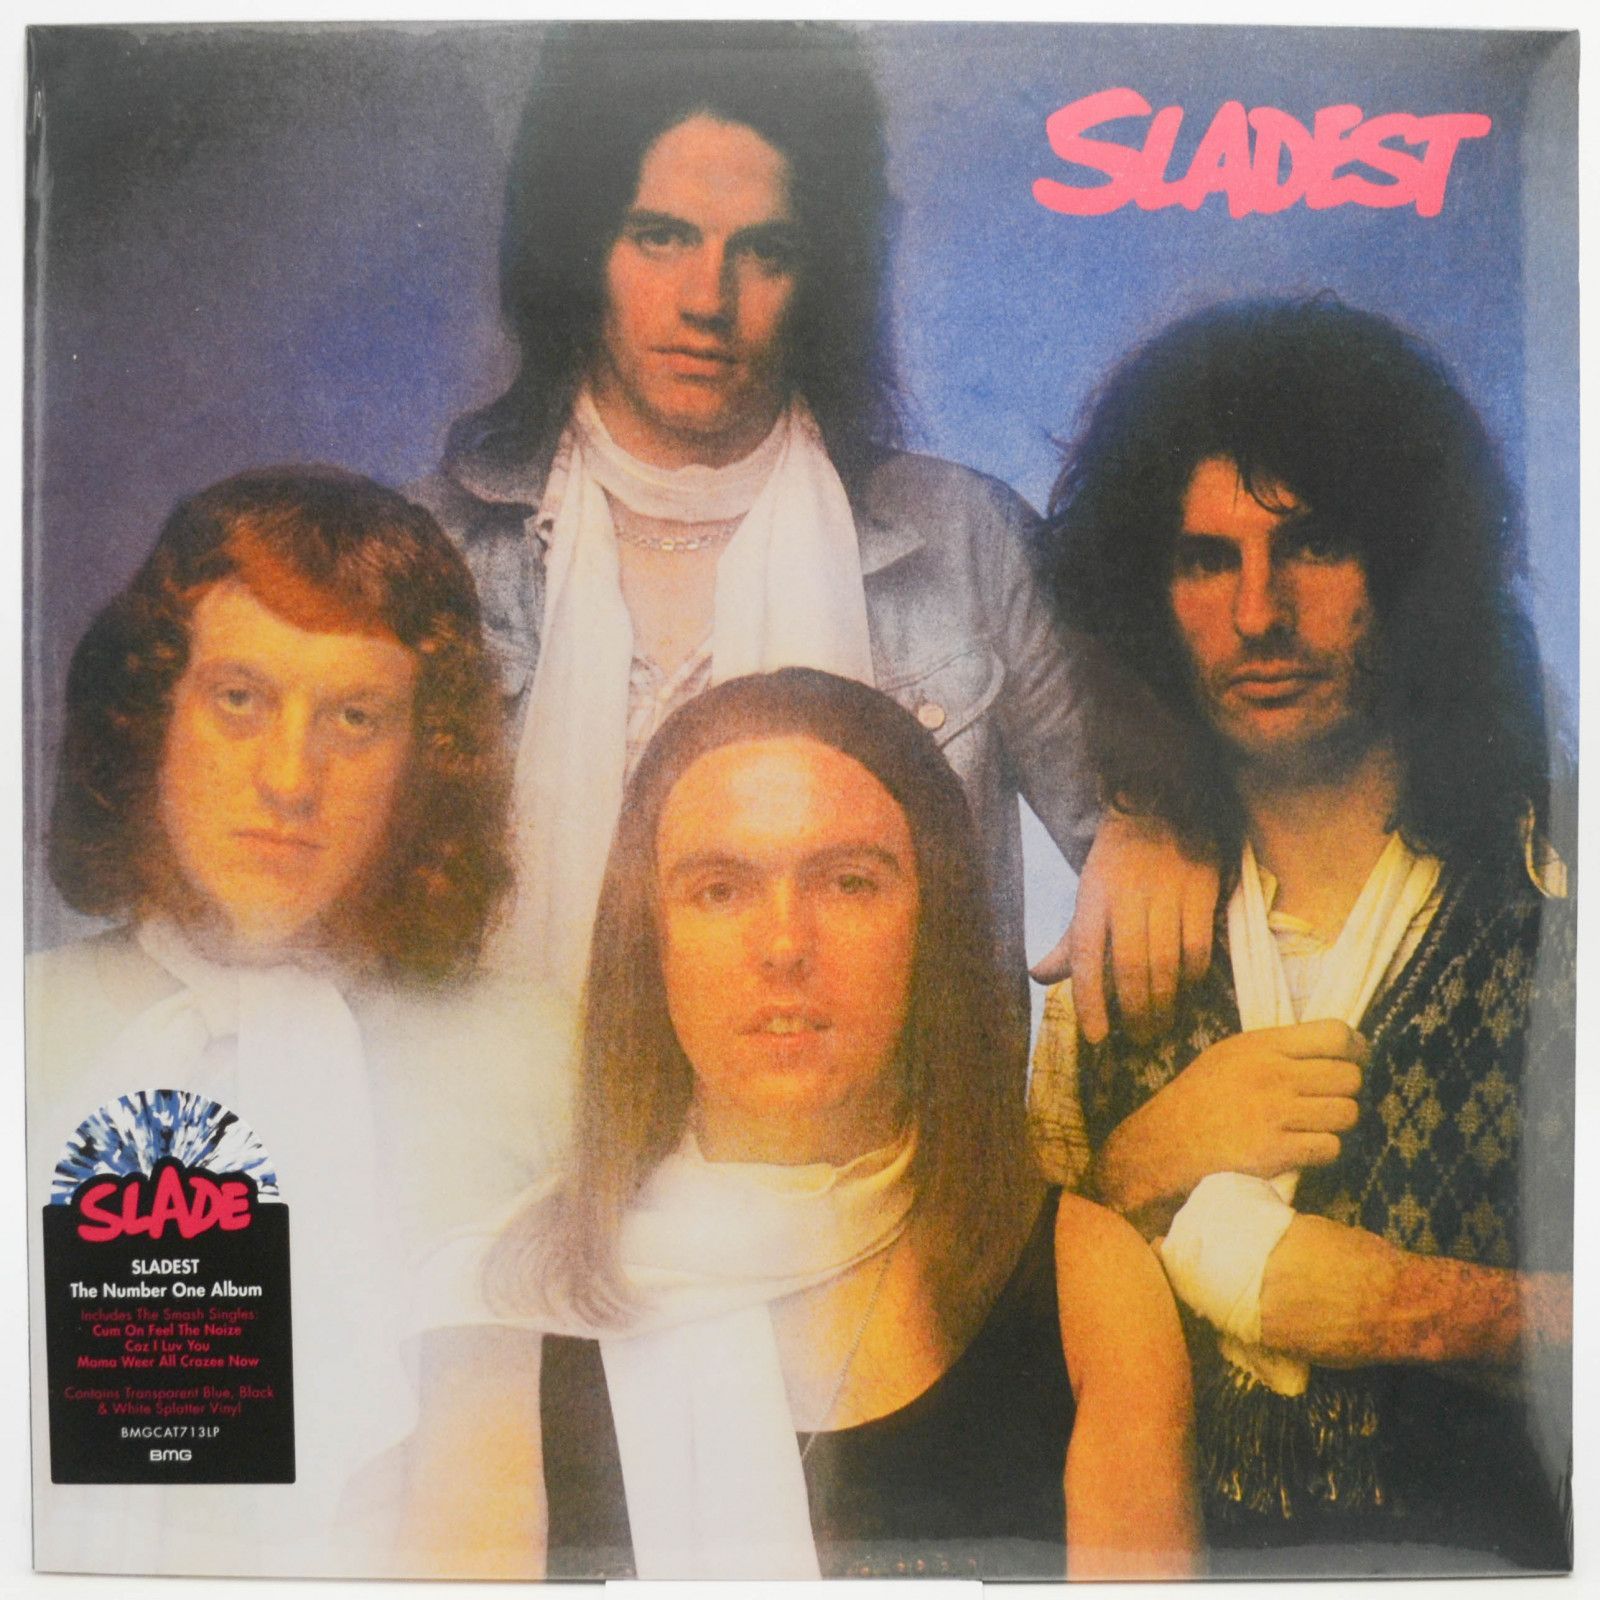 Slade — Sladest, 1978